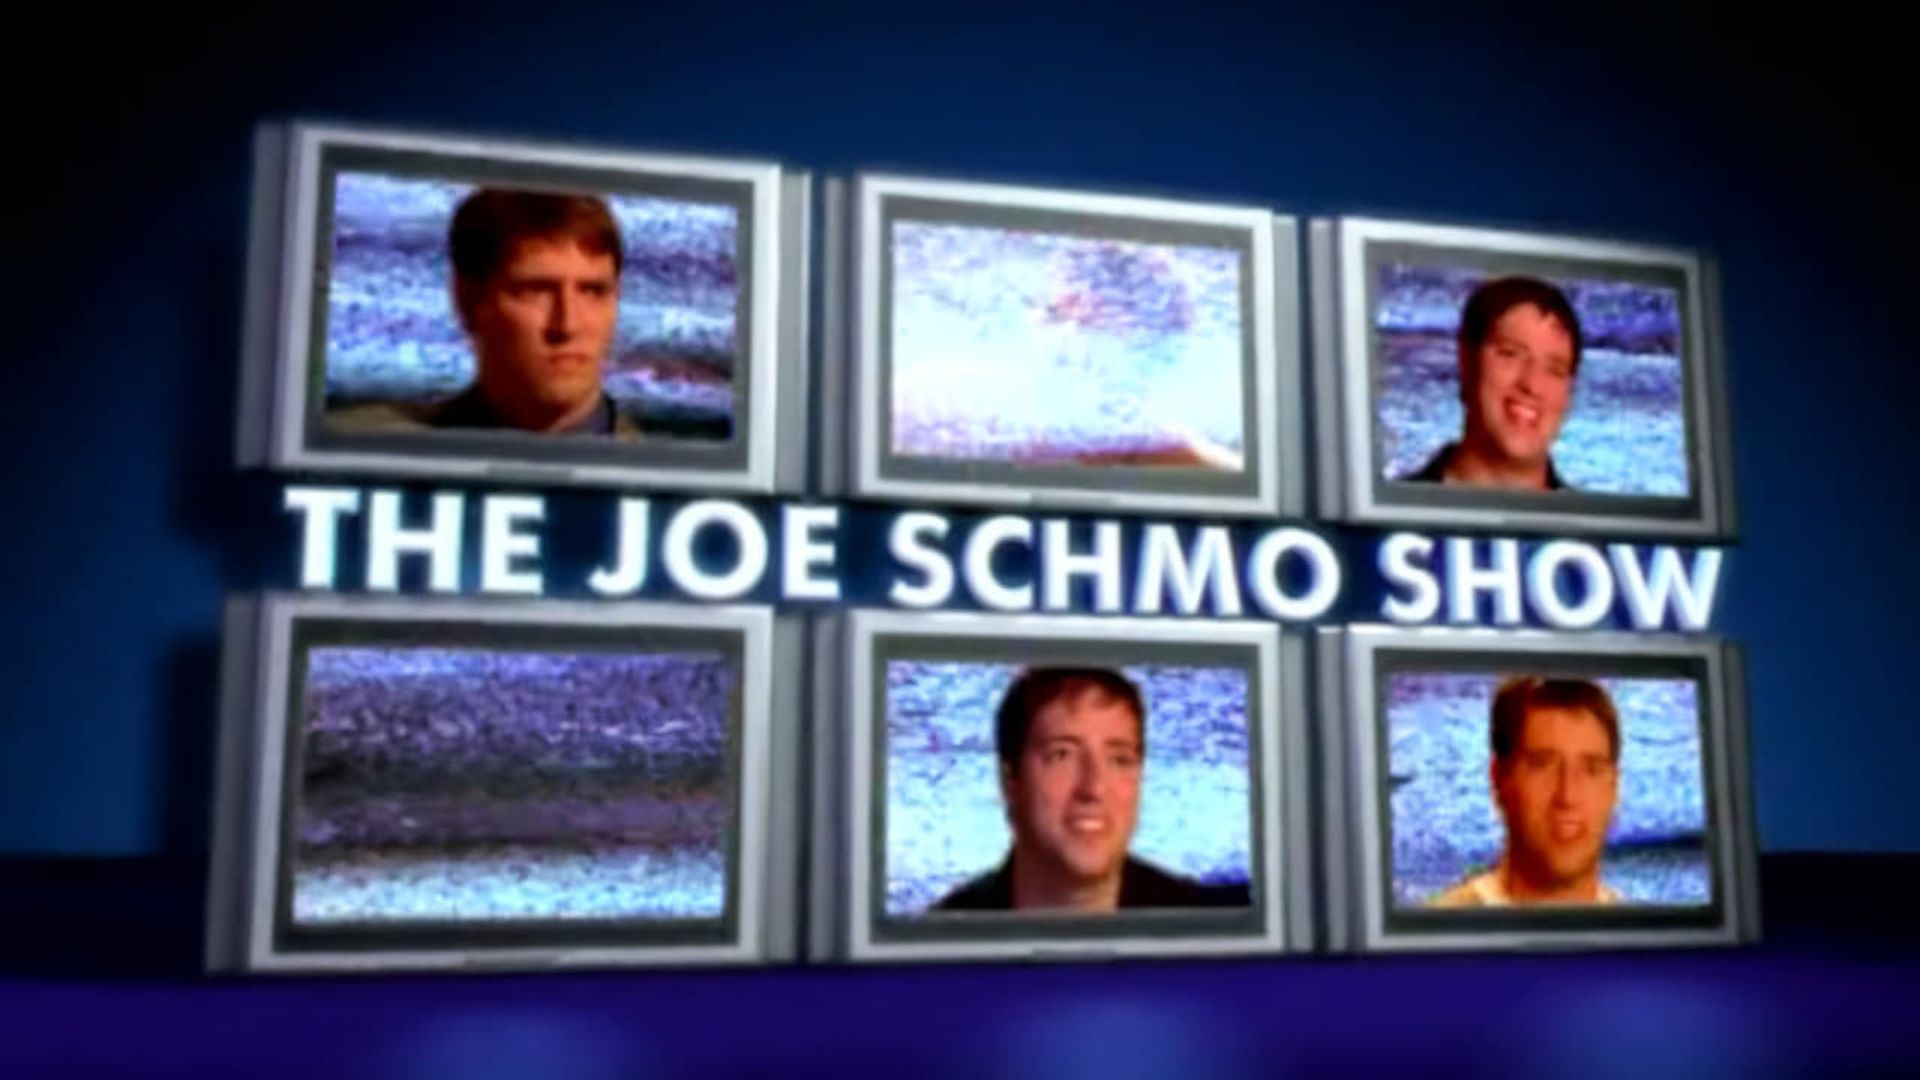 The Joe Schmo Show background